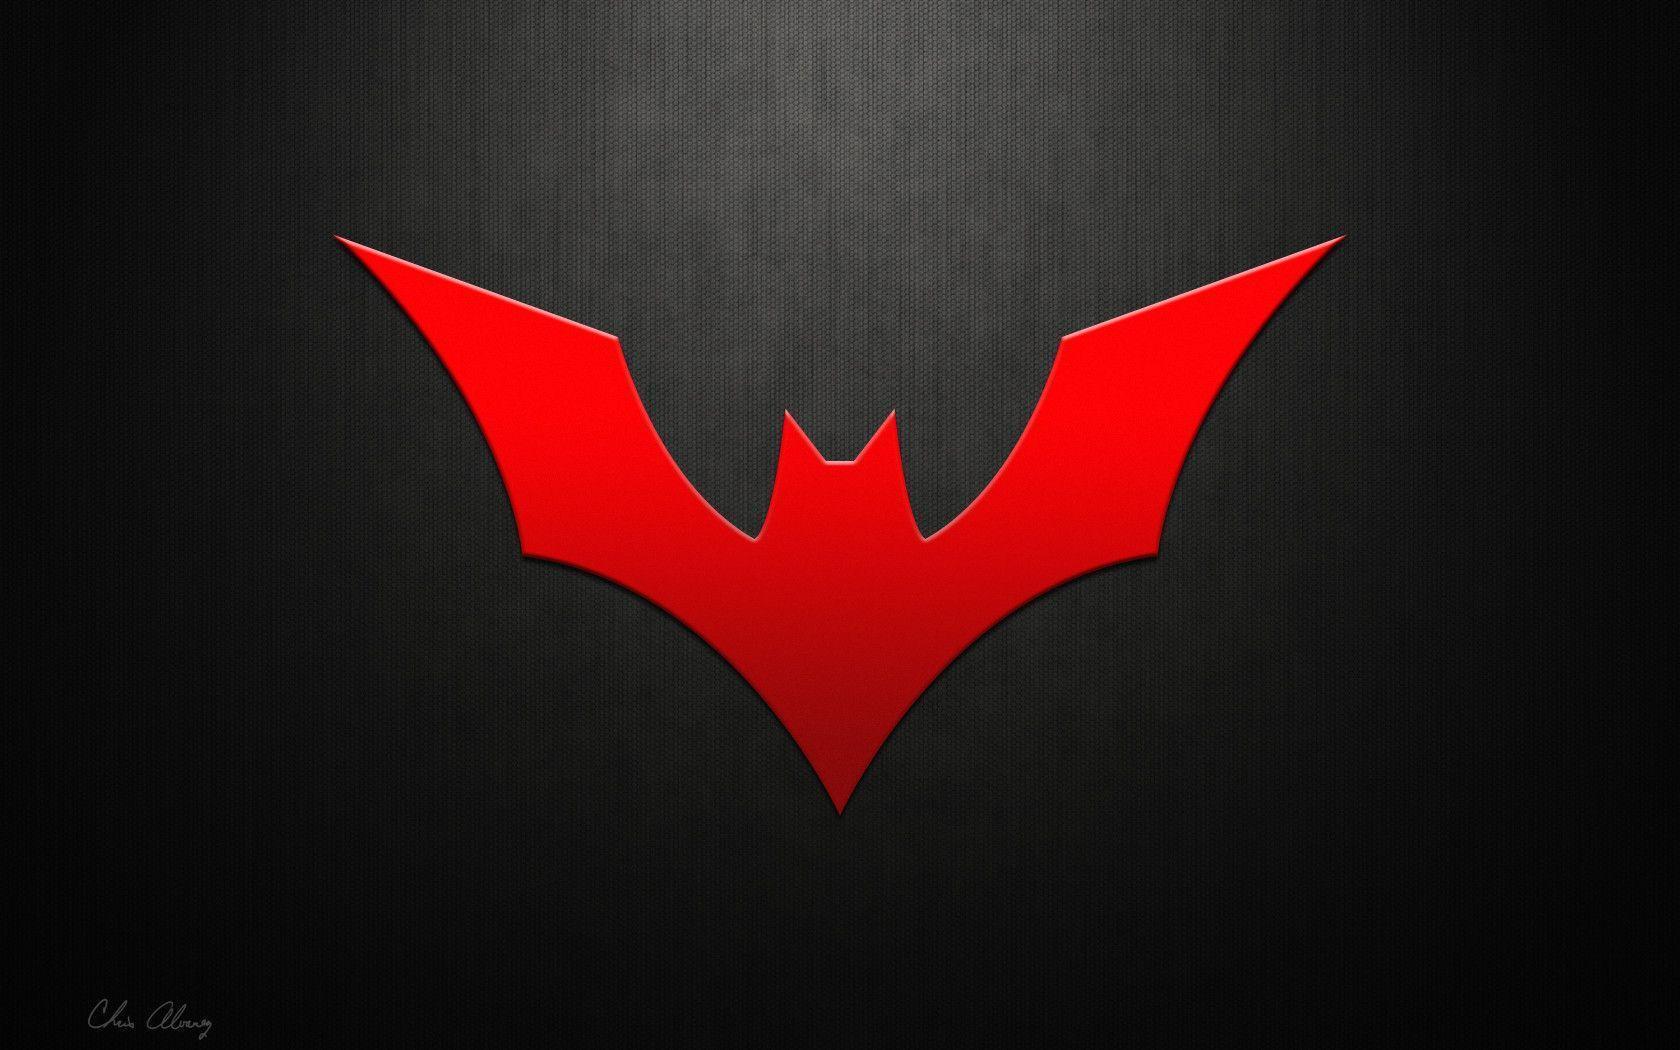 batman beyond logo wallpaper iphone 5